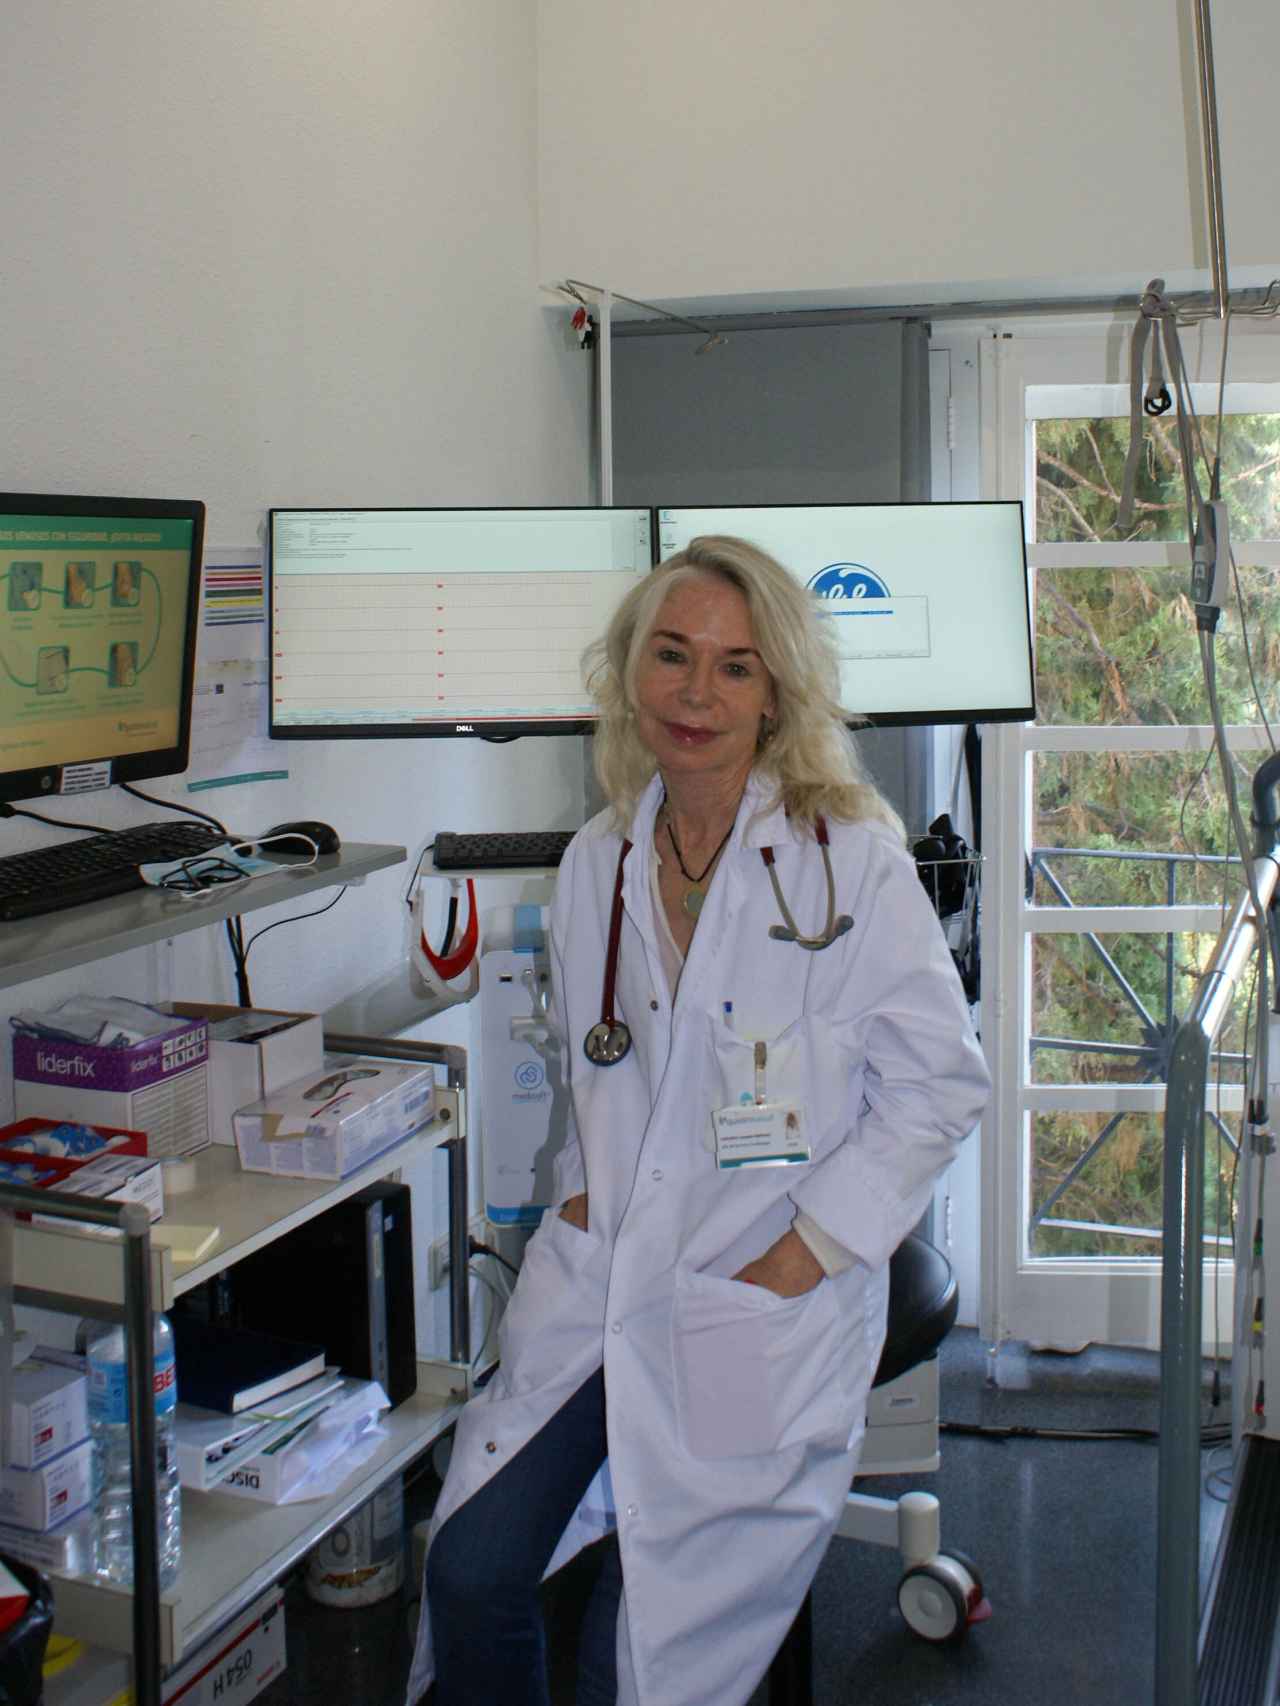 La doctora Catheline Lauwers en la clínica.